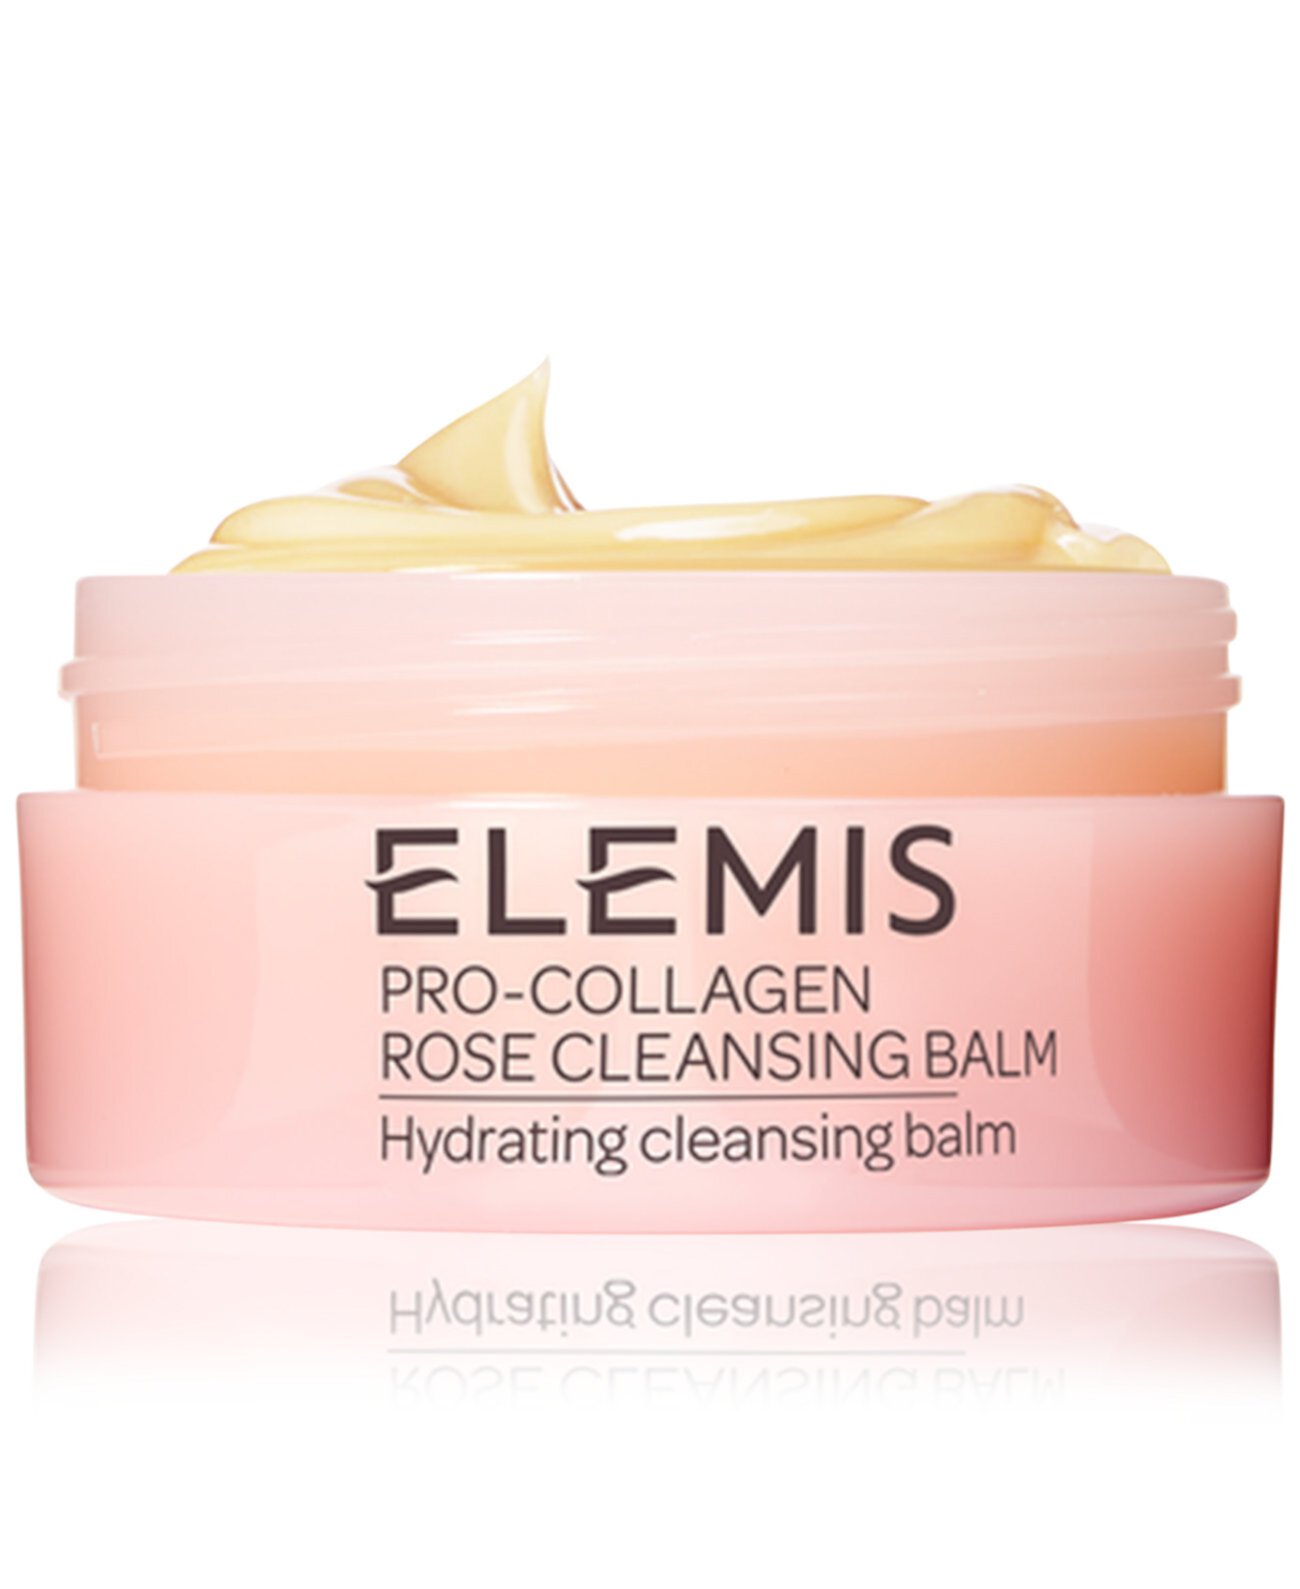 Pro-Collagen Rose Cleansing Balm, 3.5 oz. Elemis